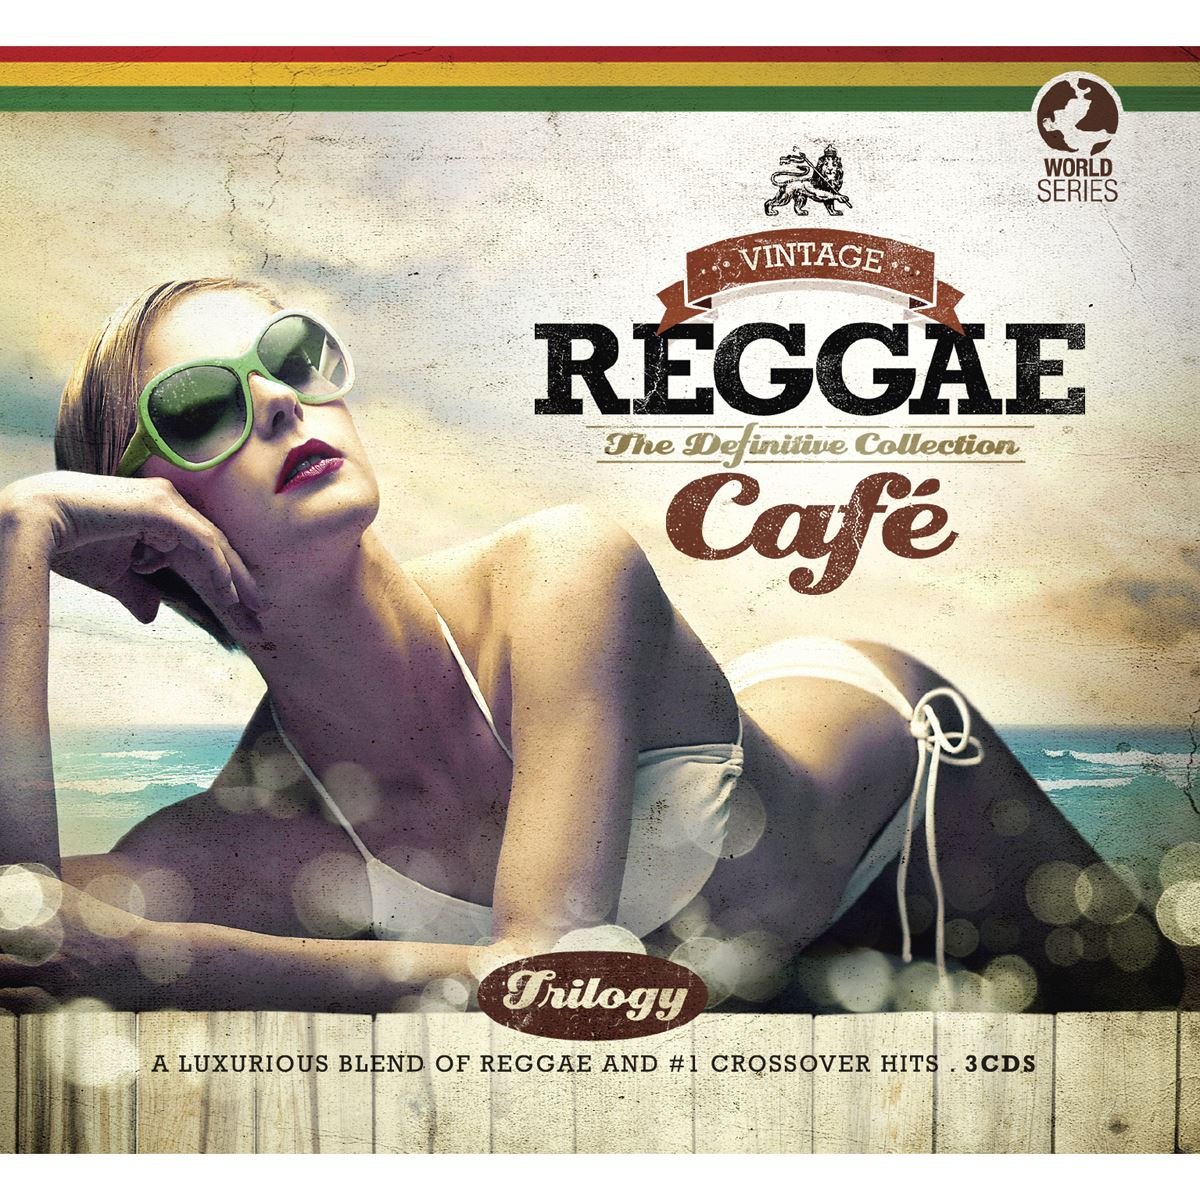 Vintage Reggae Cafe - Trilogy The Definitive Collection